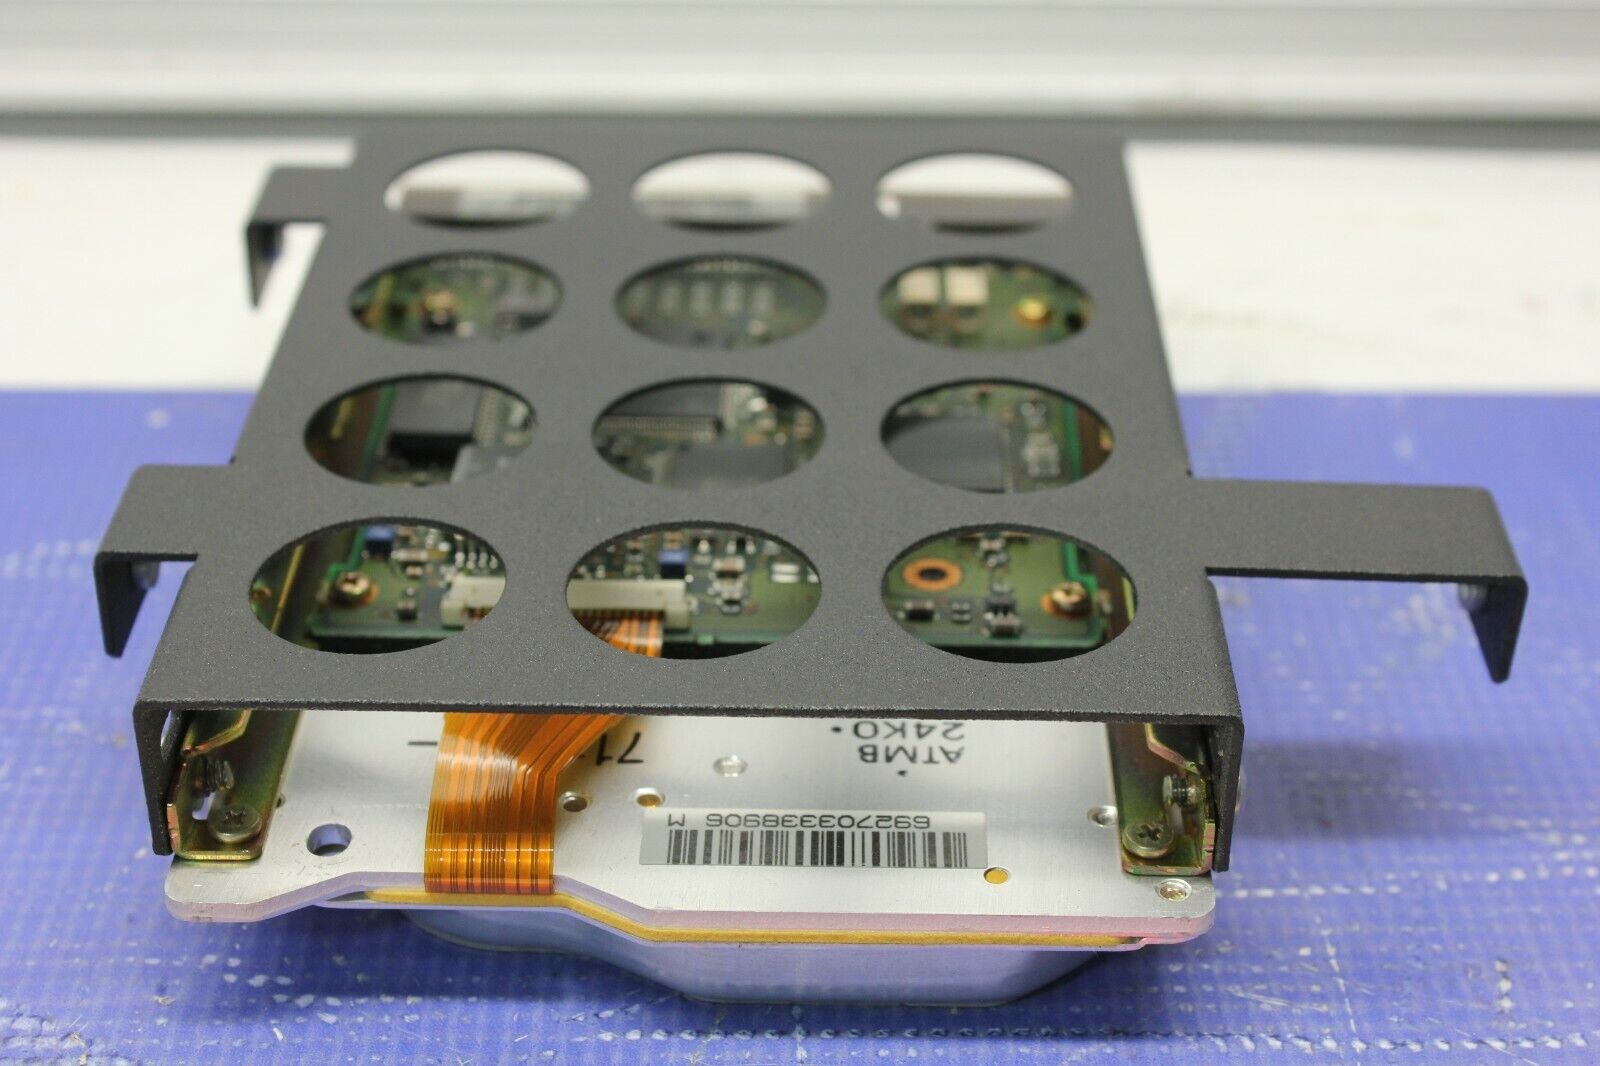 Hard Drive Disk HDD IDE Quantum Fireball TM 1280AT 1.2GB TM12A012 01-D